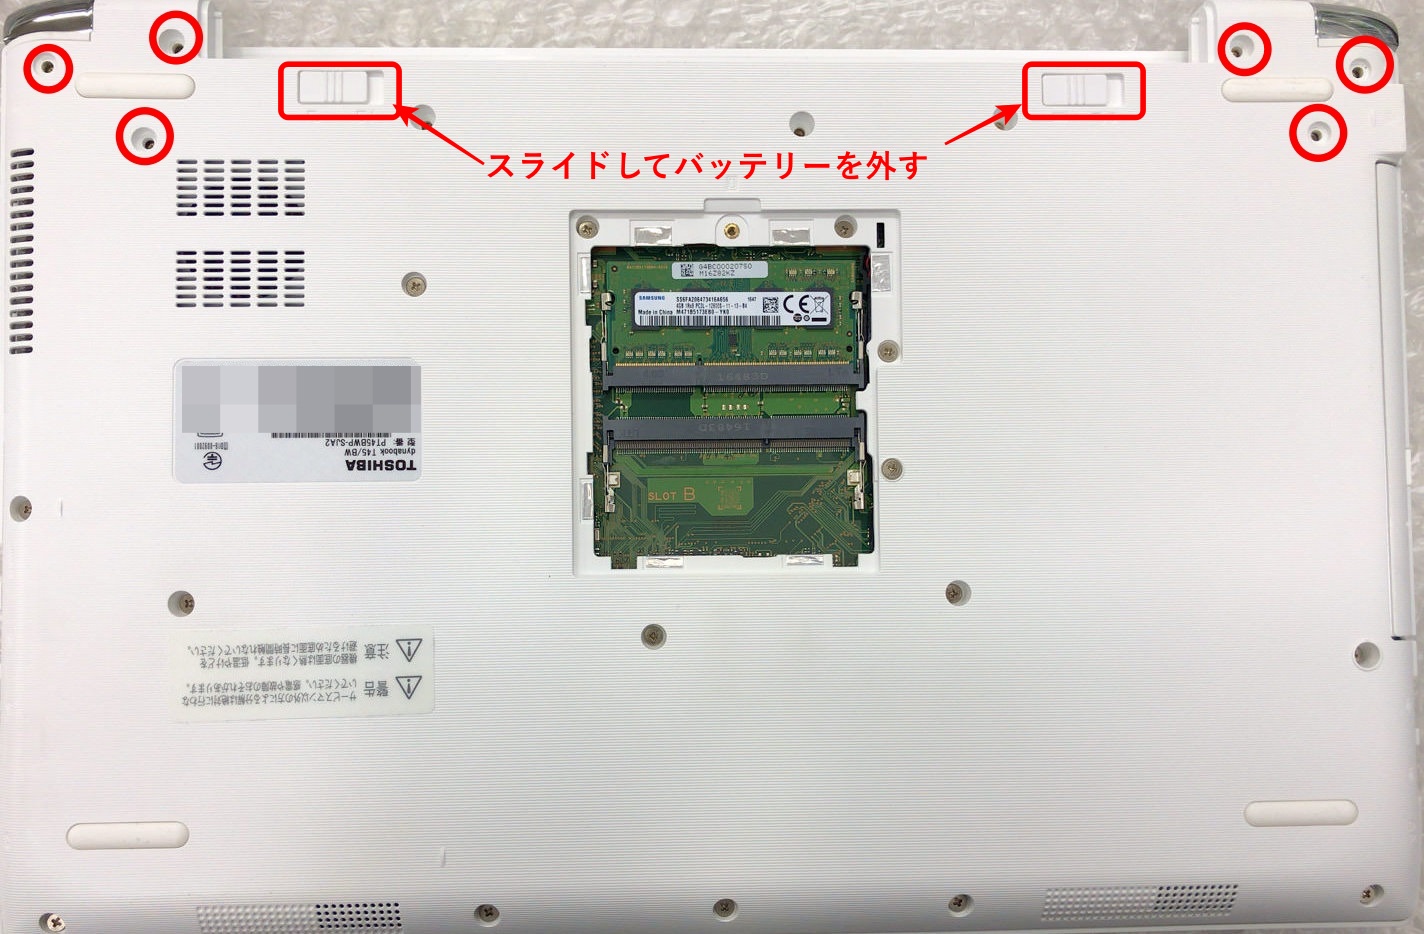 Toshiba dynabook T45/B のSSD交換方法【高速化】 | Naosuyo Blog